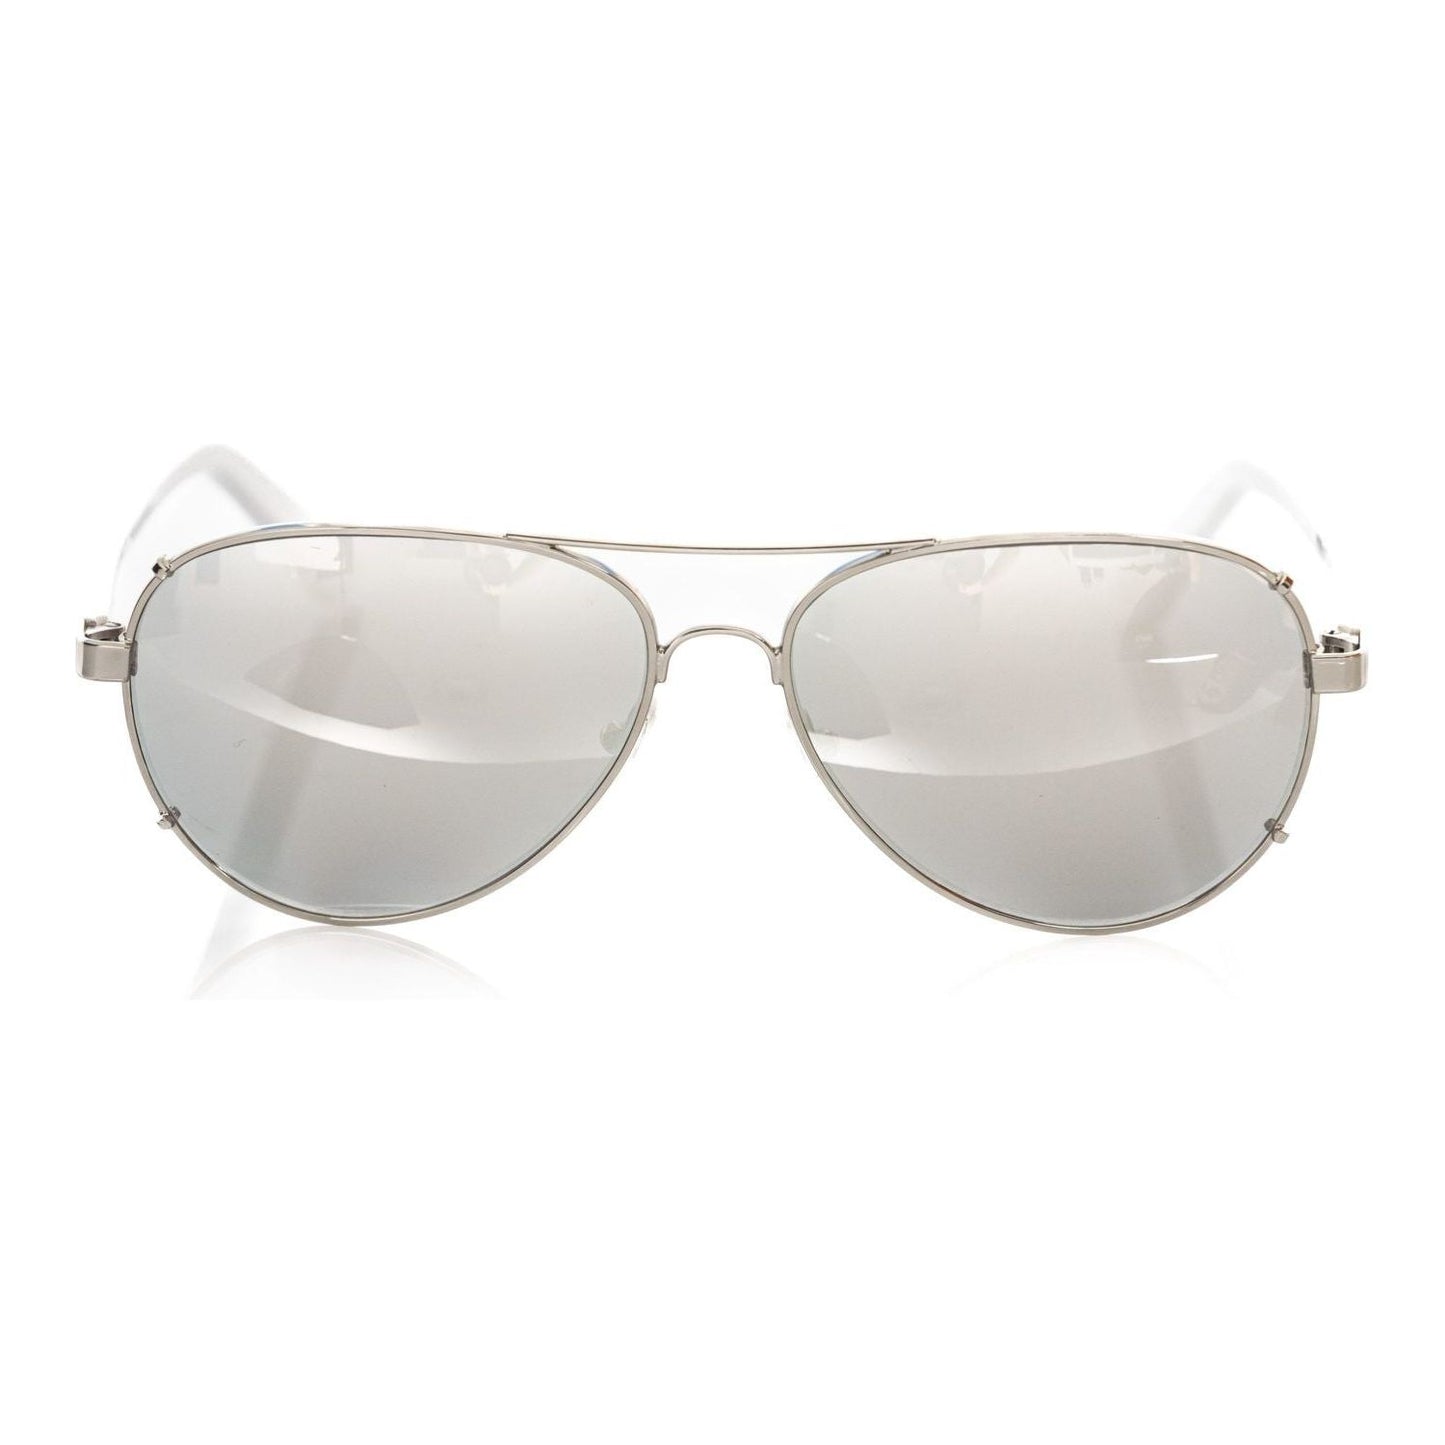 Frankie Morello Elegant Aviator Eyewear with Smoked Lenses silver-metallic-fibre-sunglasses-3 product-22121-1398405153-scaled-779c5ee2-43e.jpg